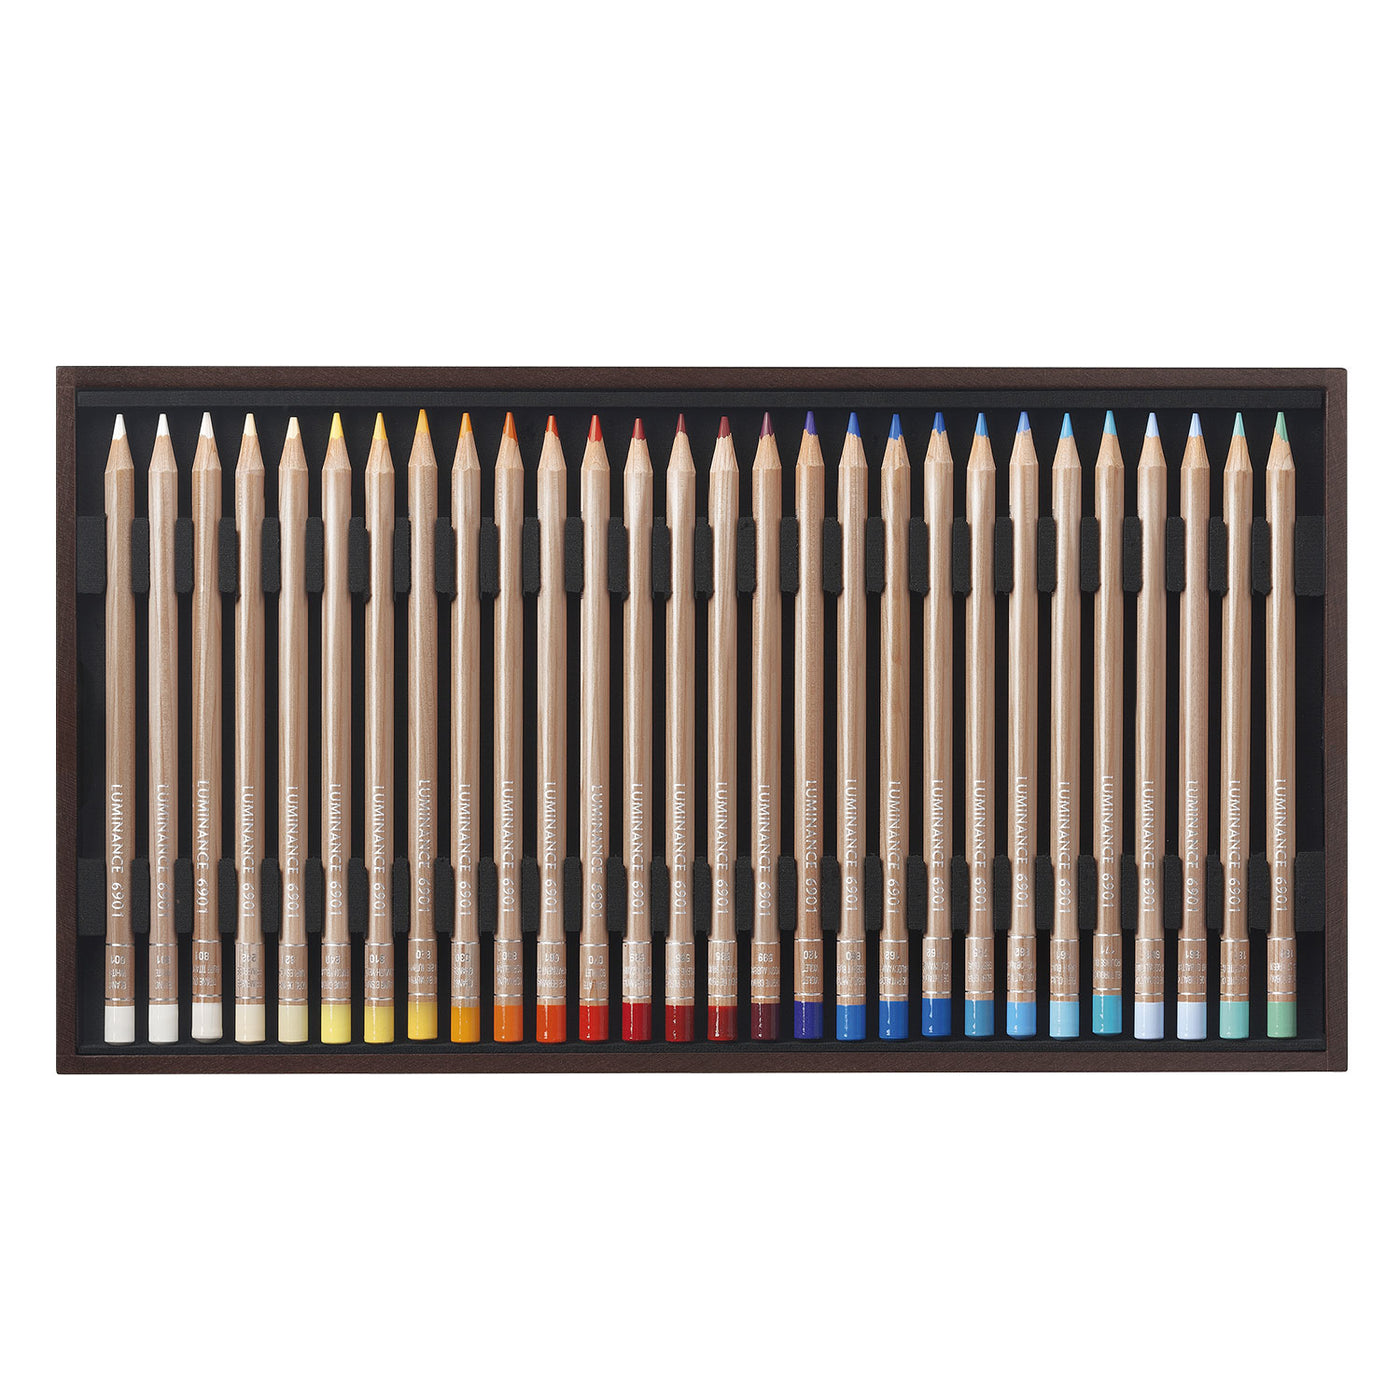 Caran d'Ache Luminance 6901 - Wooden Box of 80 Colour Pencils 4